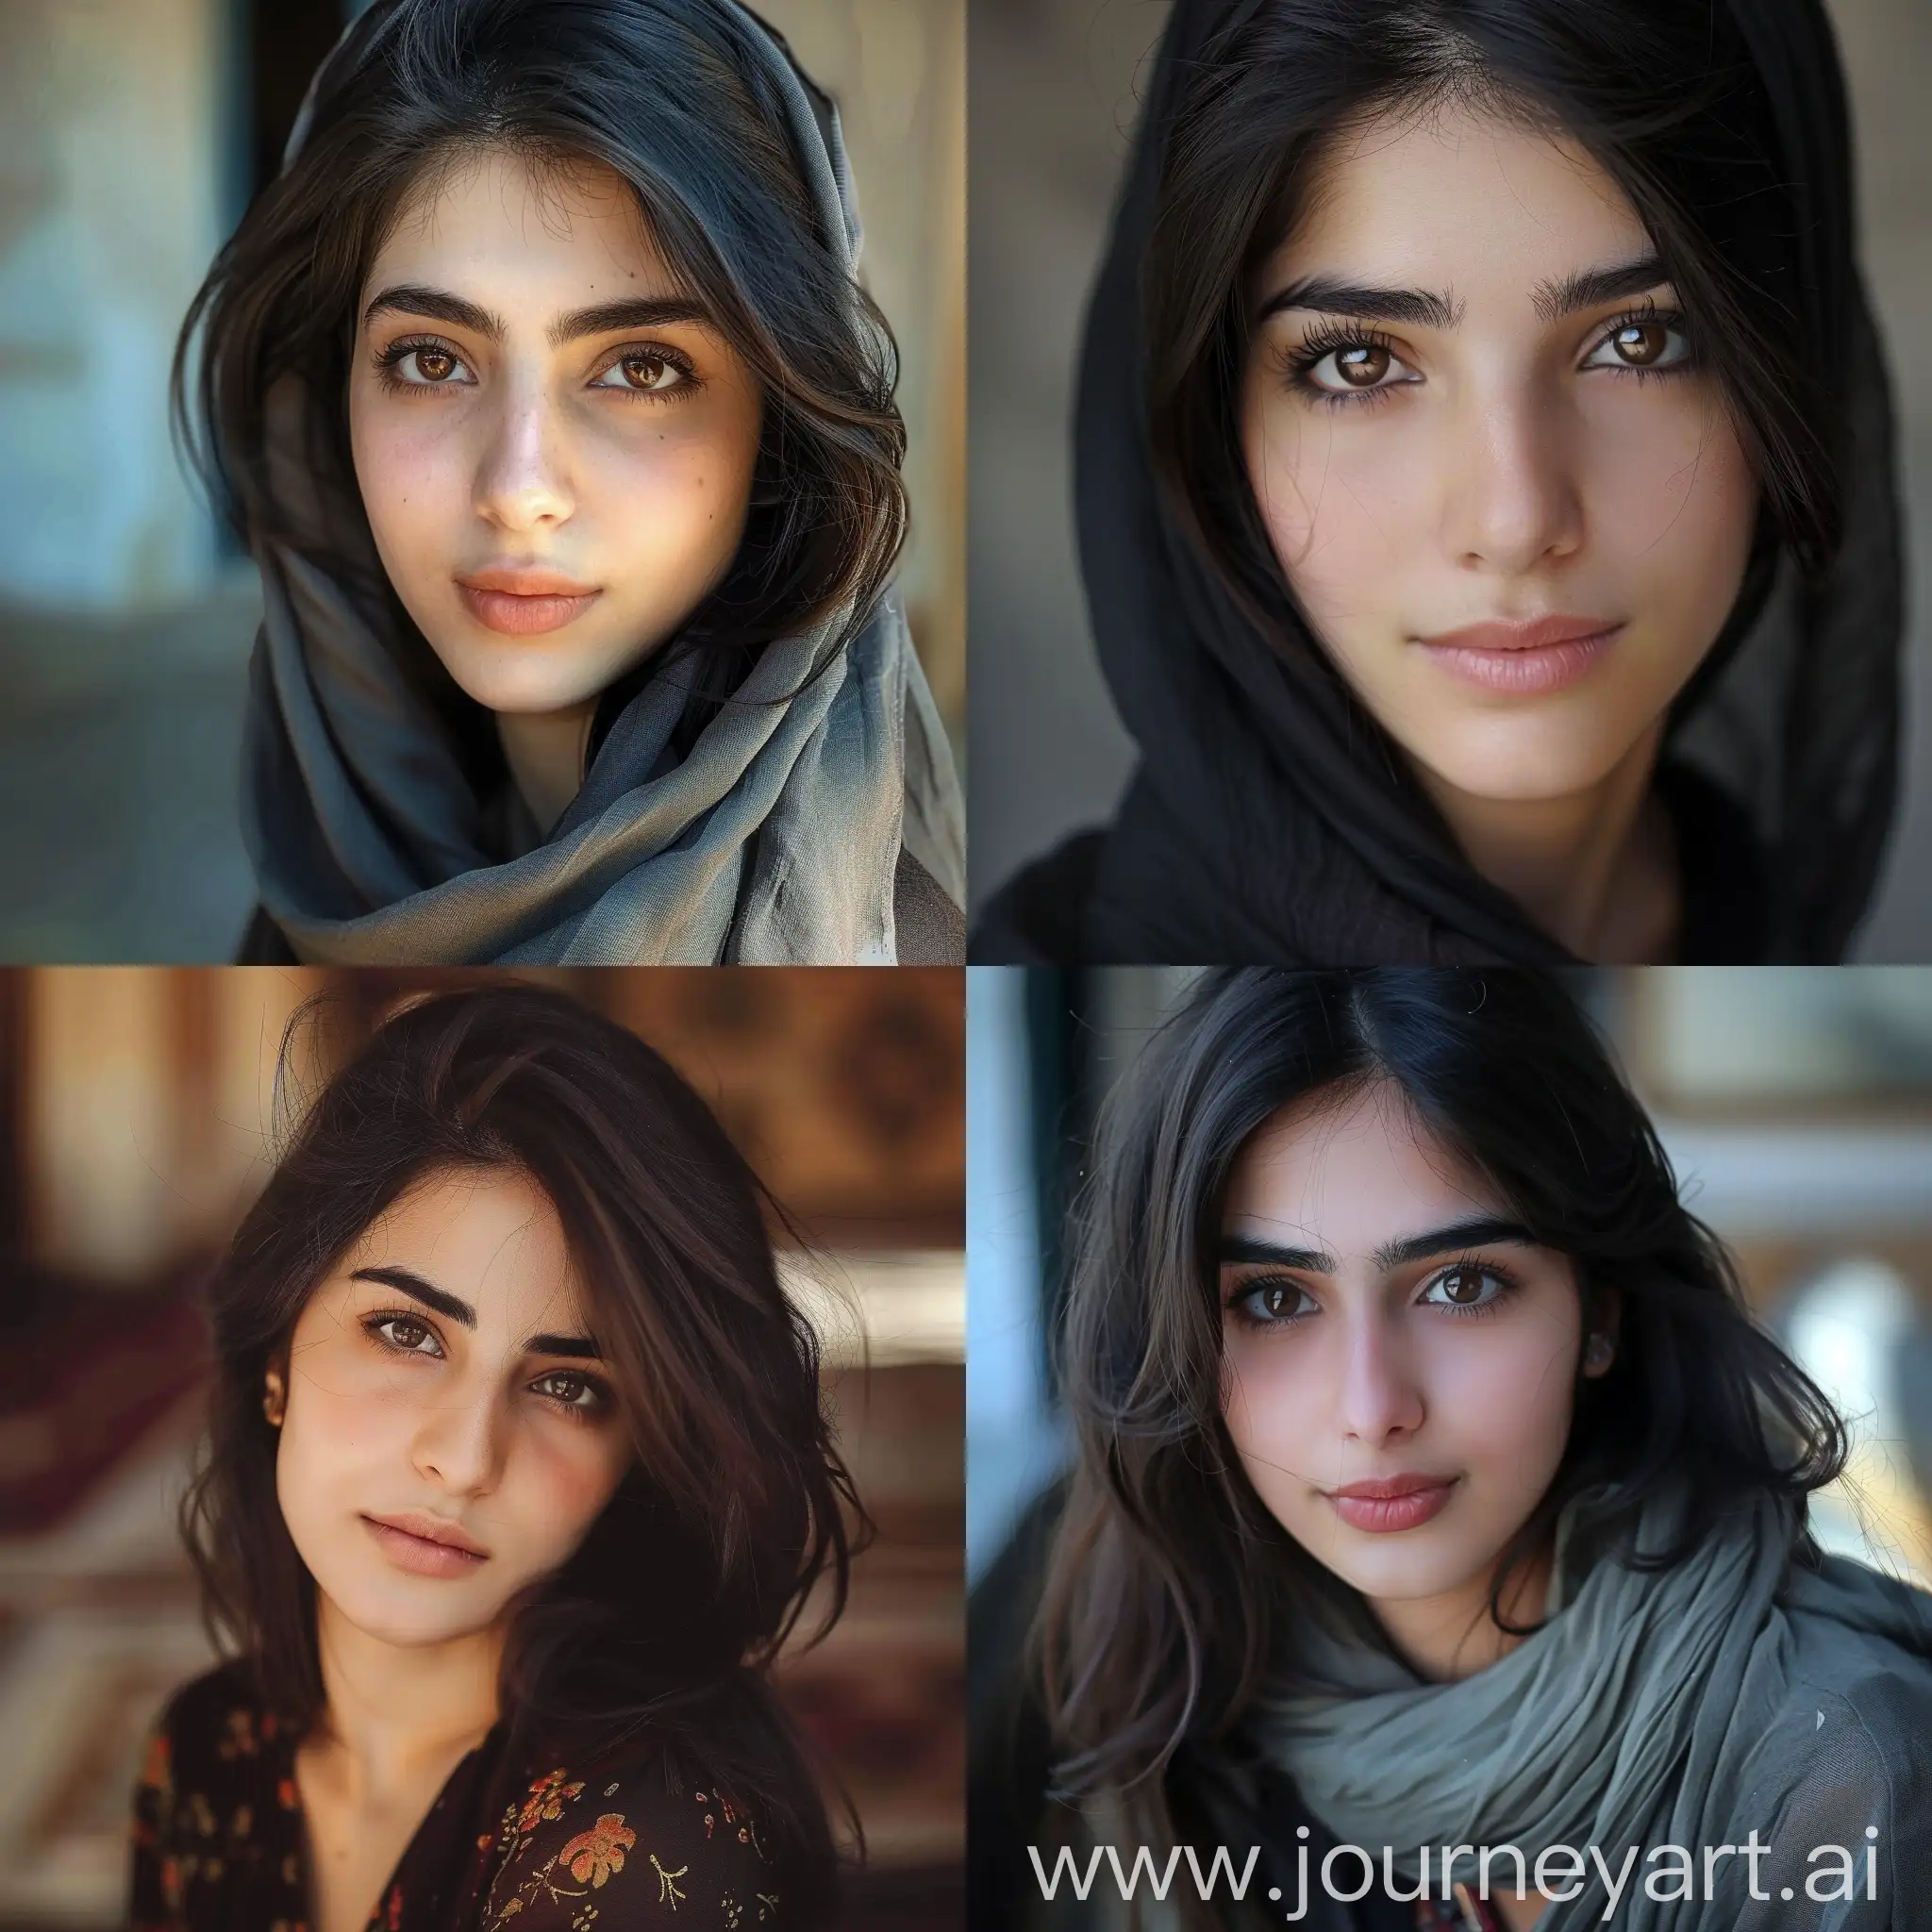 Stunning-Iranian-Girls-with-Dark-Hair-and-Brown-Eyes